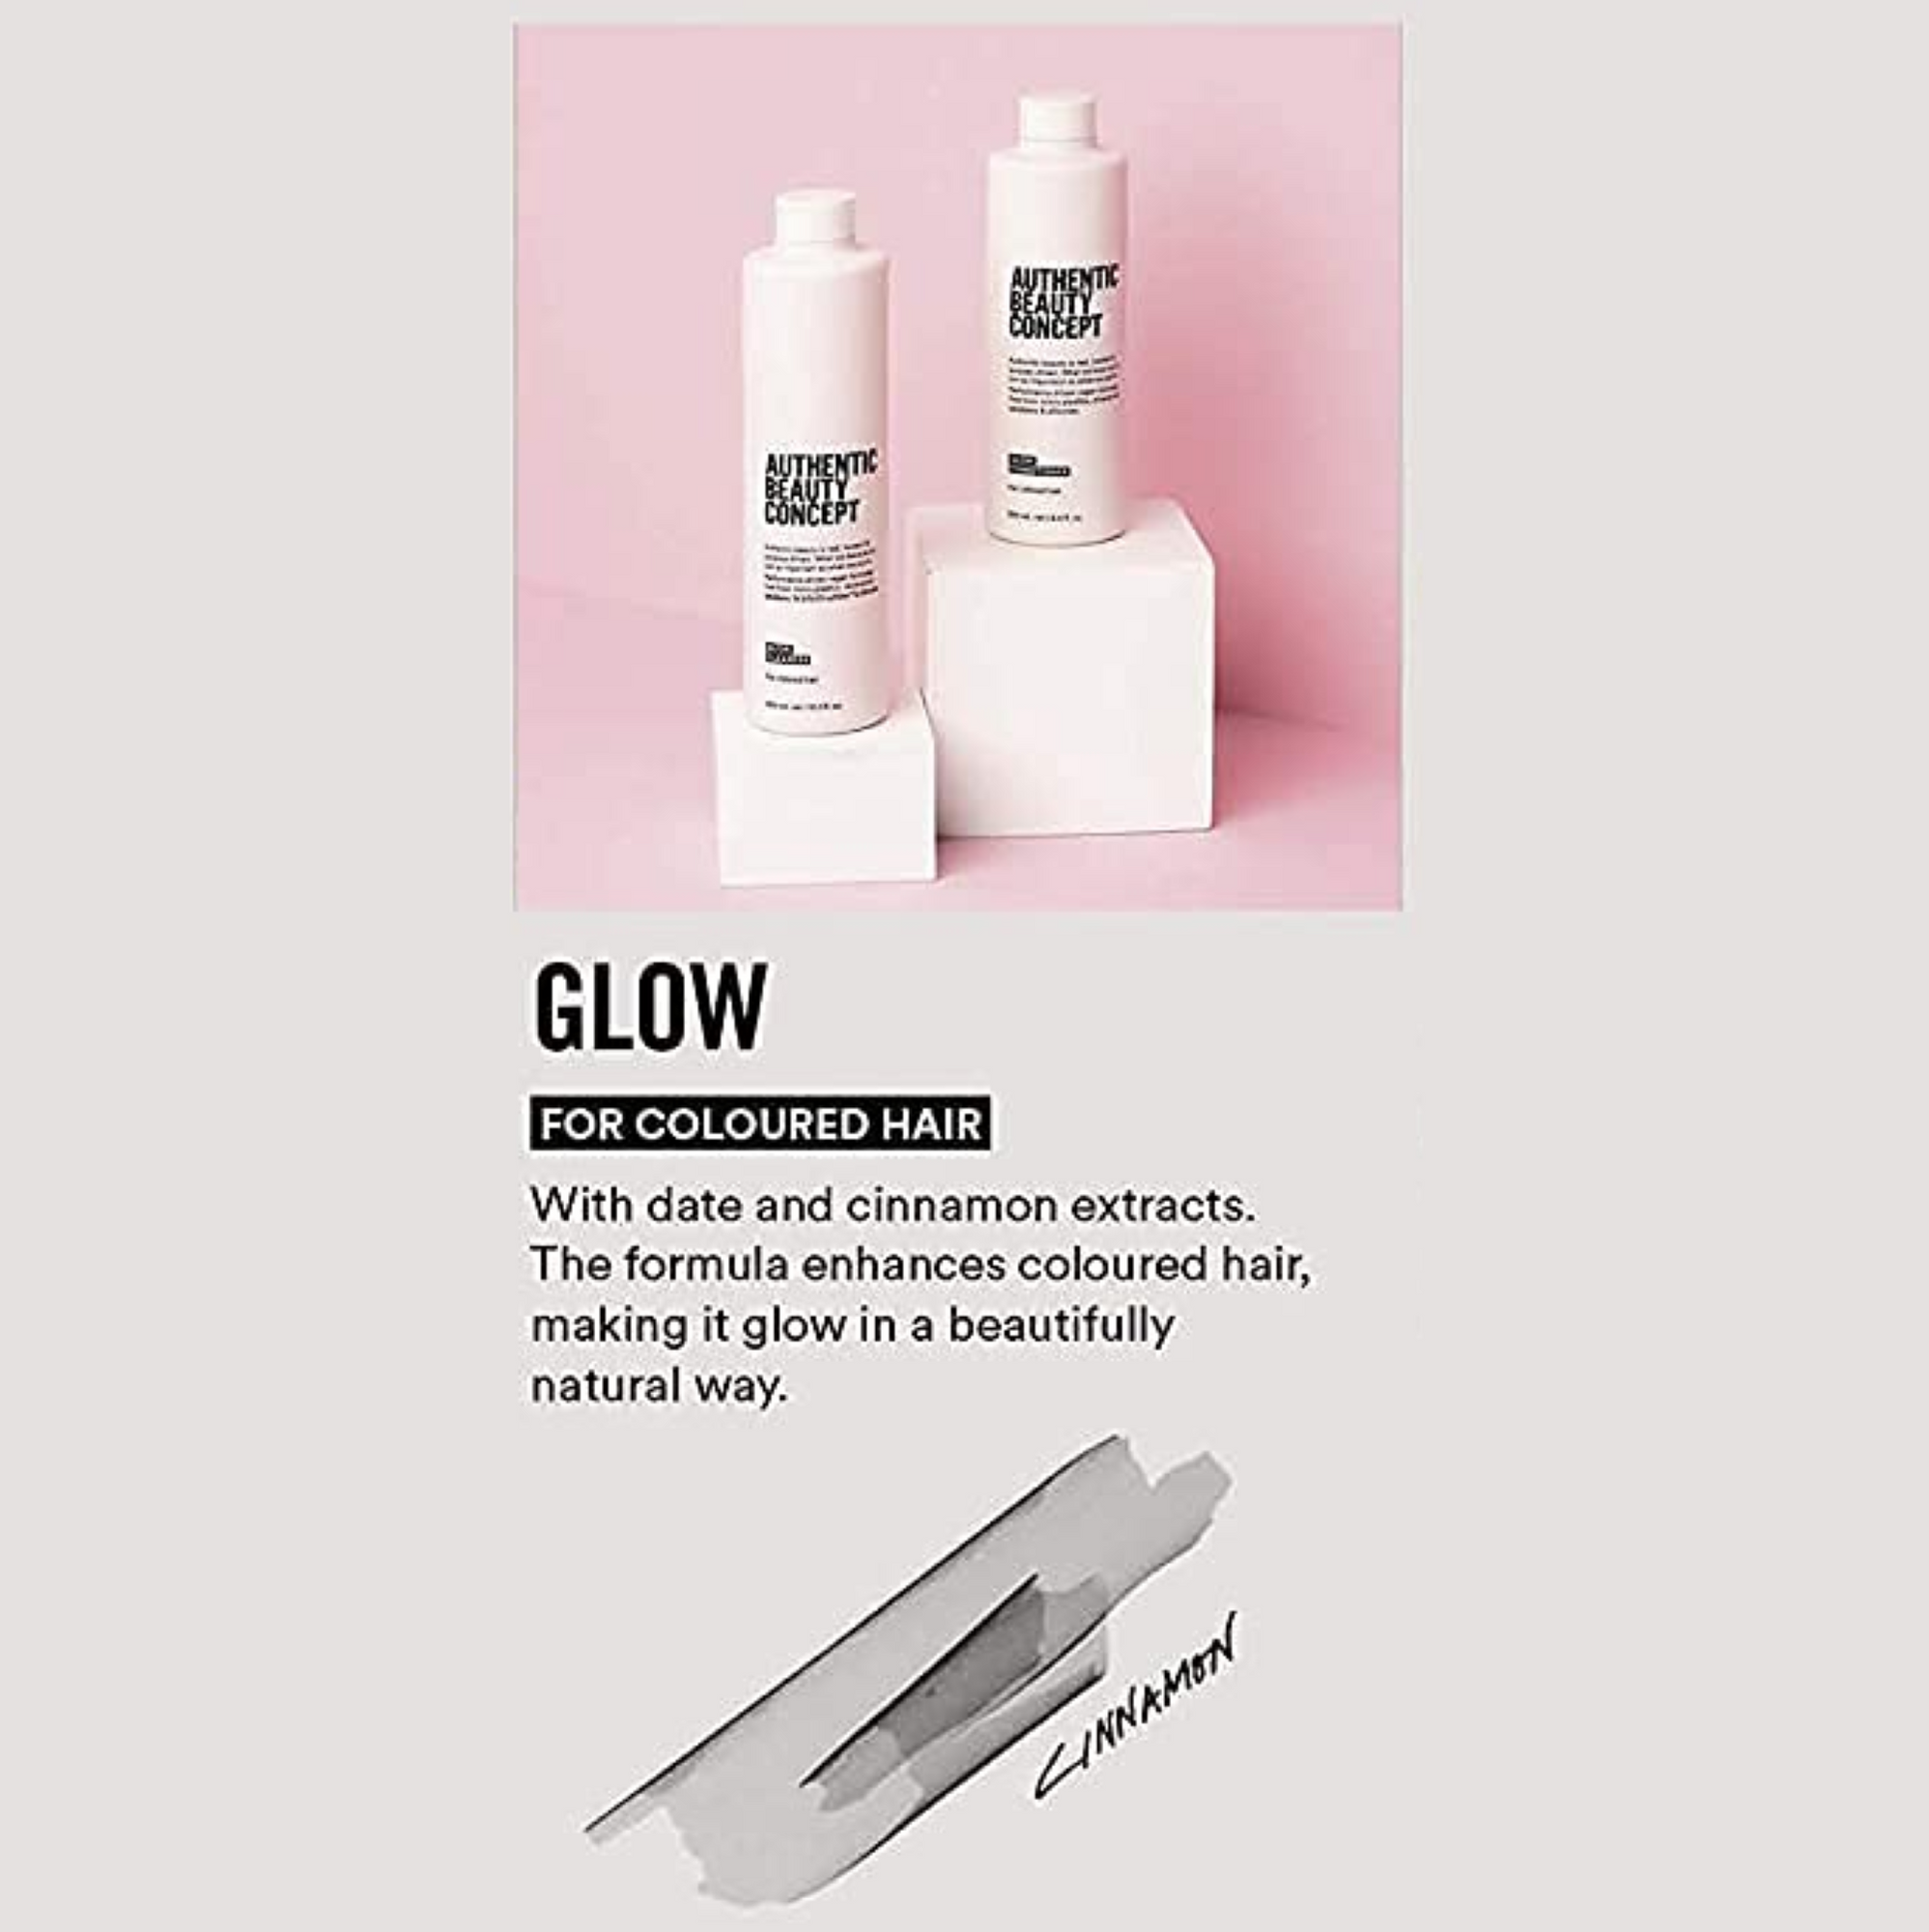 Authentic Beauty Concept Glow Conditioner / 8OZ